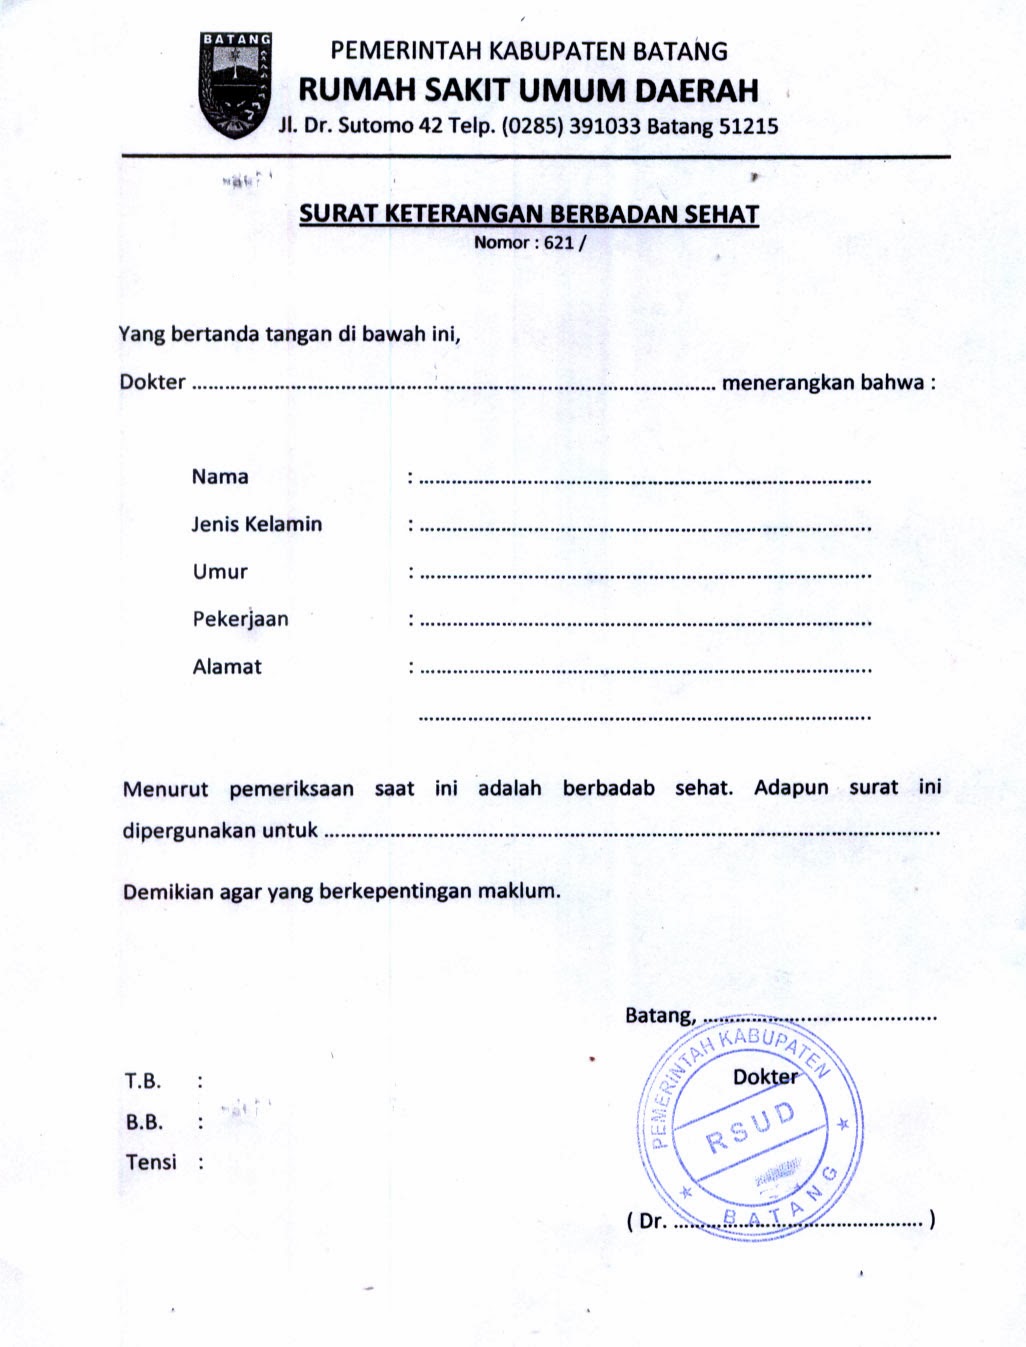 Contoh Surat Dokter Klinik Tangerang Nusagates